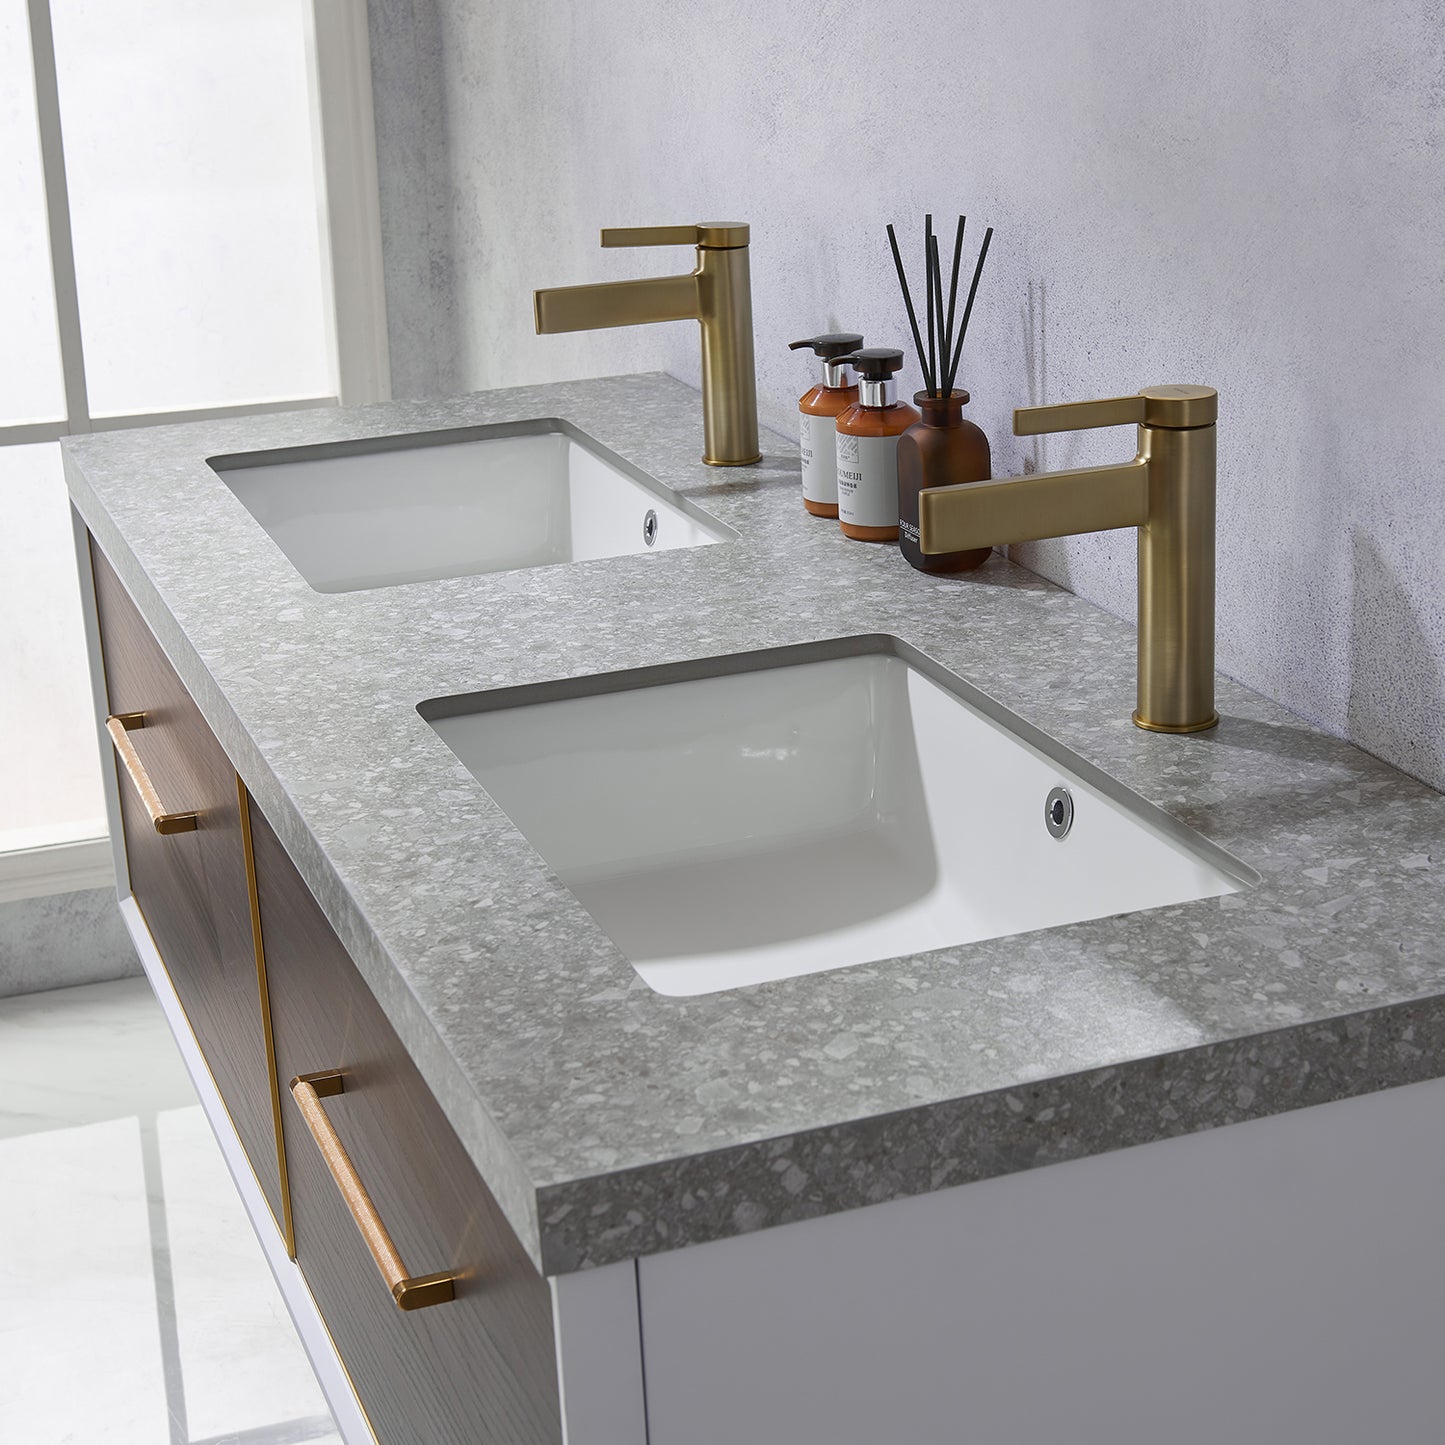 Caparroso 60" Double Sink Bath Vanity in Dark Walnut  with Grey Sintered Stone Top